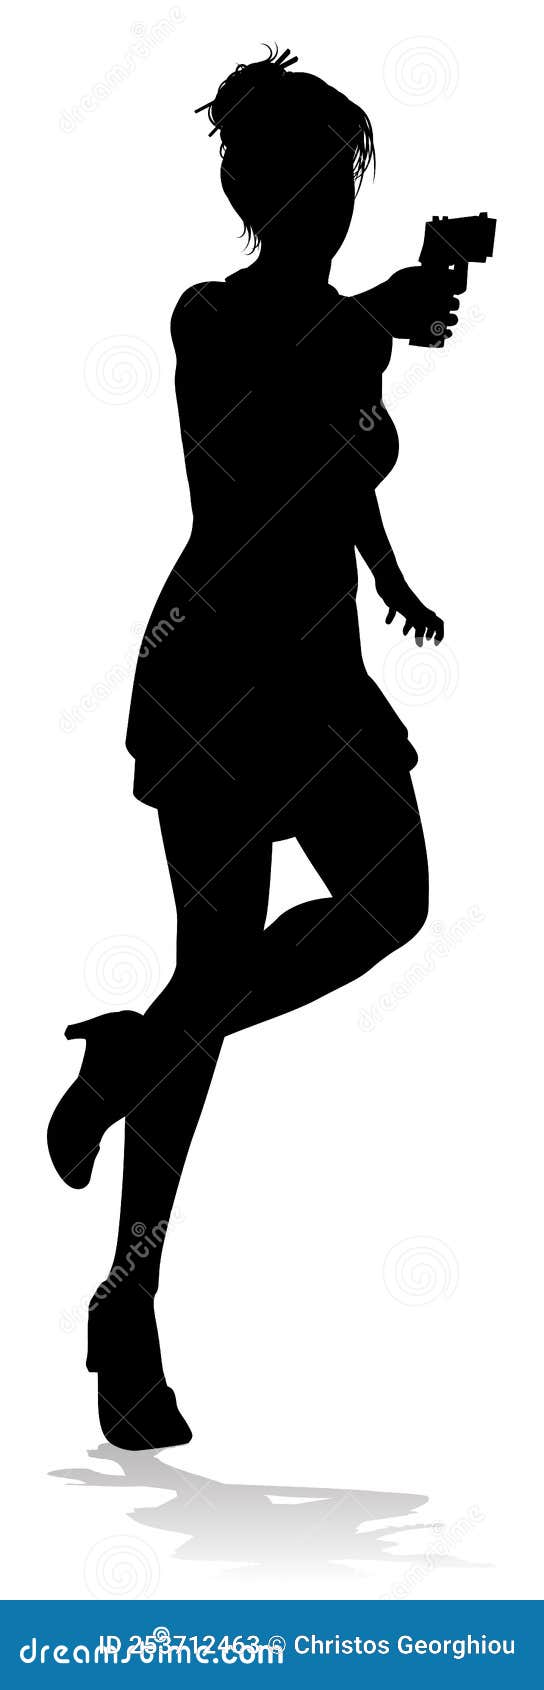 https://thumbs.dreamstime.com/z/woman-silhouette-action-secret-agent-spy-gun-action-hero-female-movie-star-woman-silhouette-hitman-spy-secret-253712463.jpg